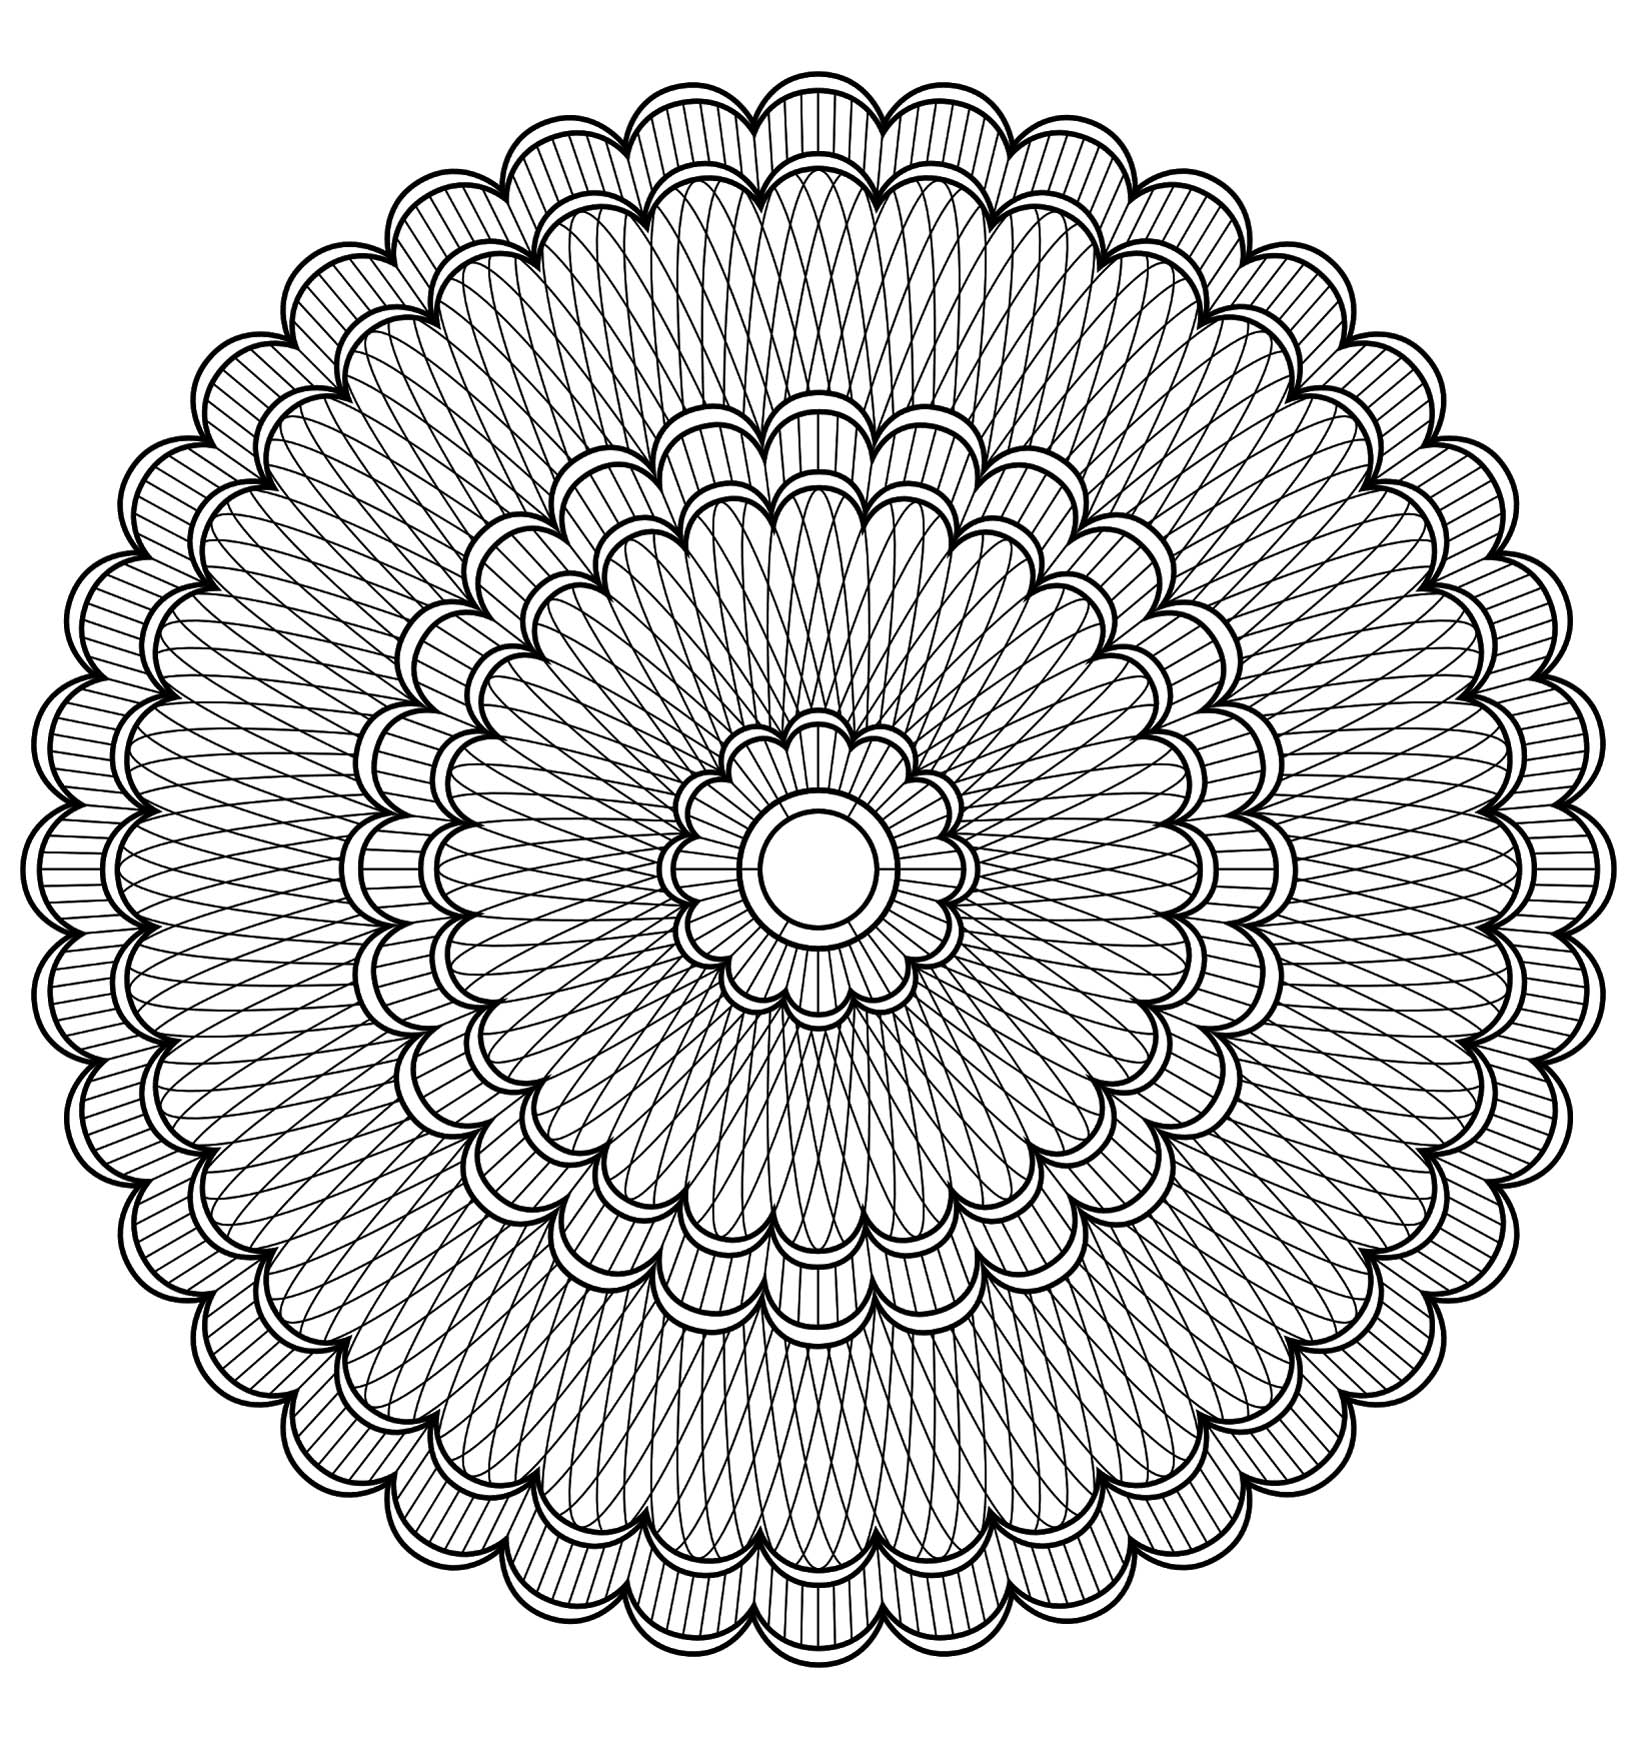 Mandala to color patterns geometric - 4